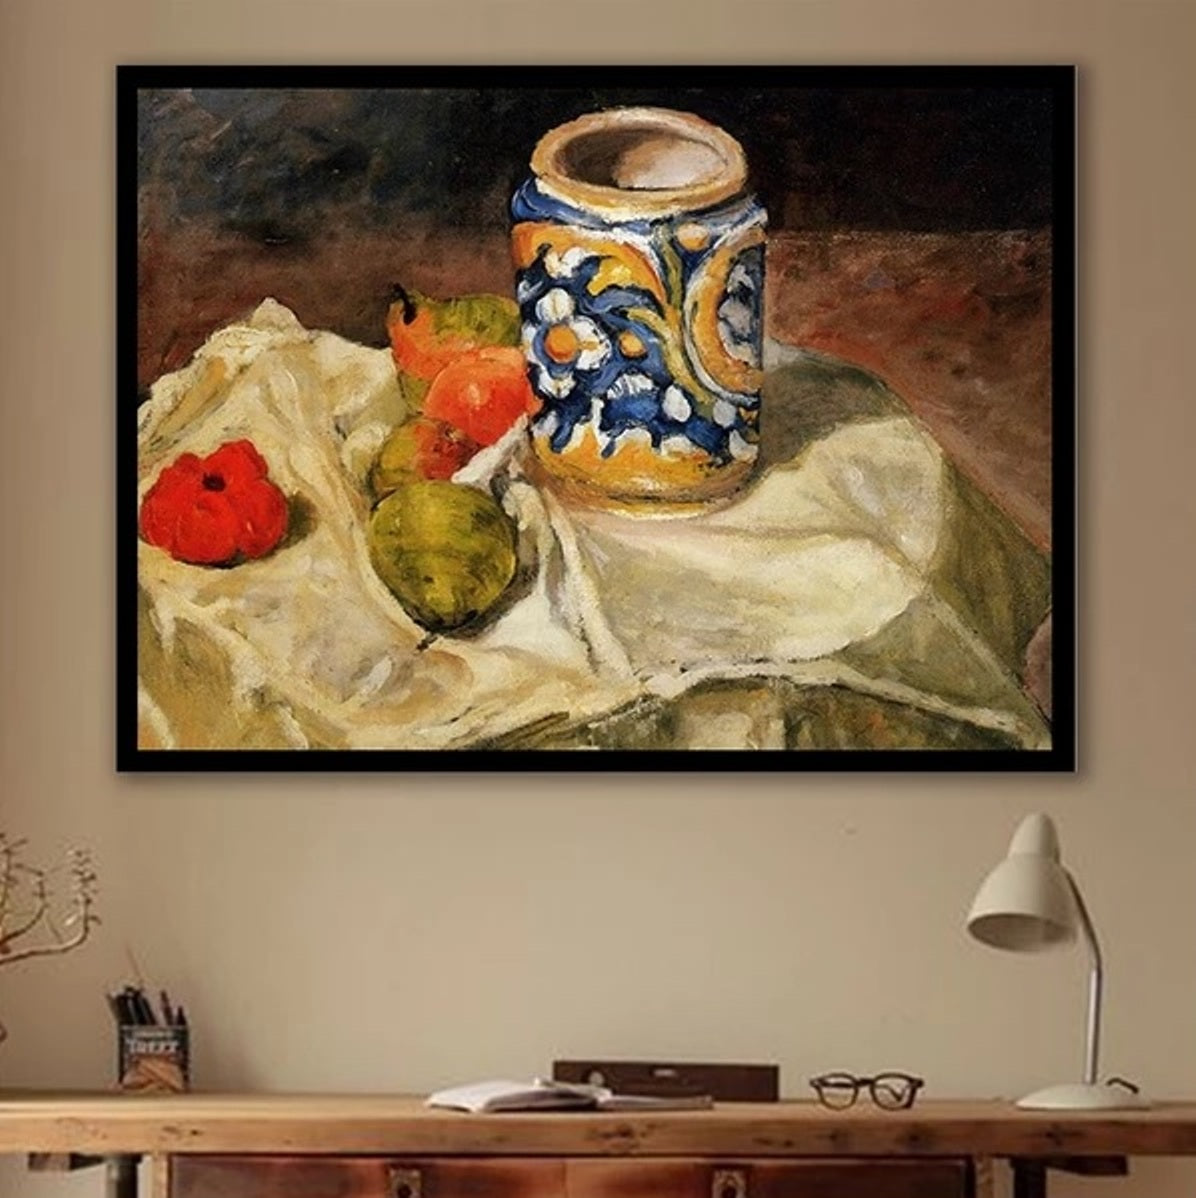 Still Life with Italian Earthenware Jar by Paul Cezanne - Van-Go Paint-By-Number Kit